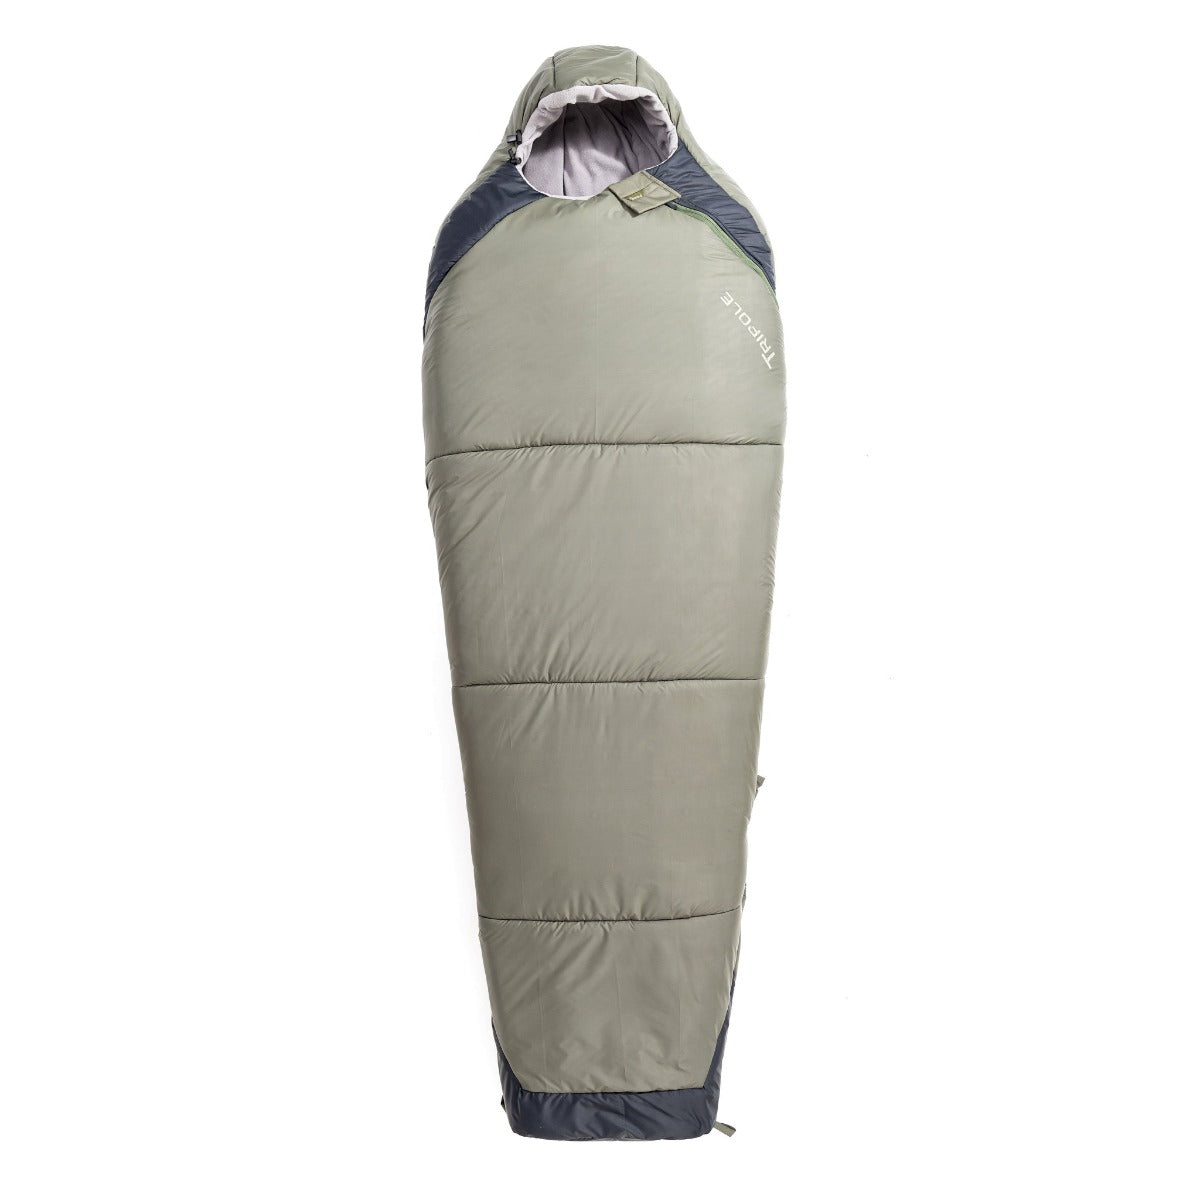 Zanskar Series -15°C Army Sleeping Bag with Fleece Inner 2